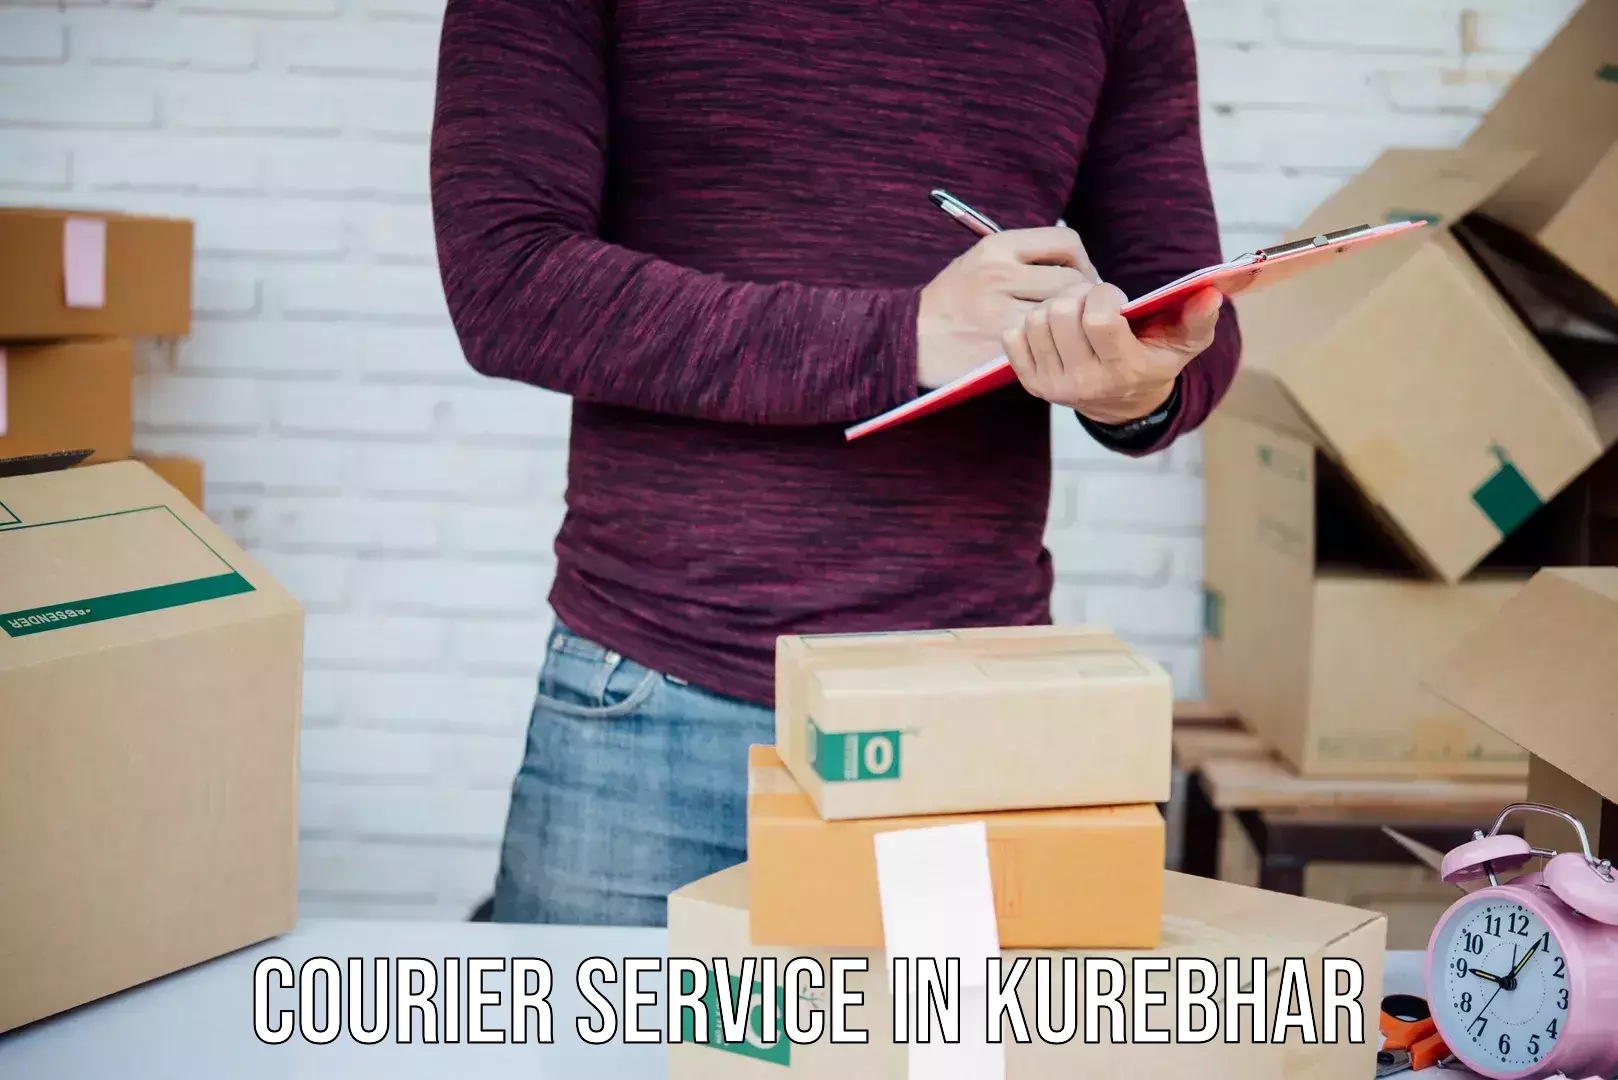 Customer-oriented courier services in Kurebhar